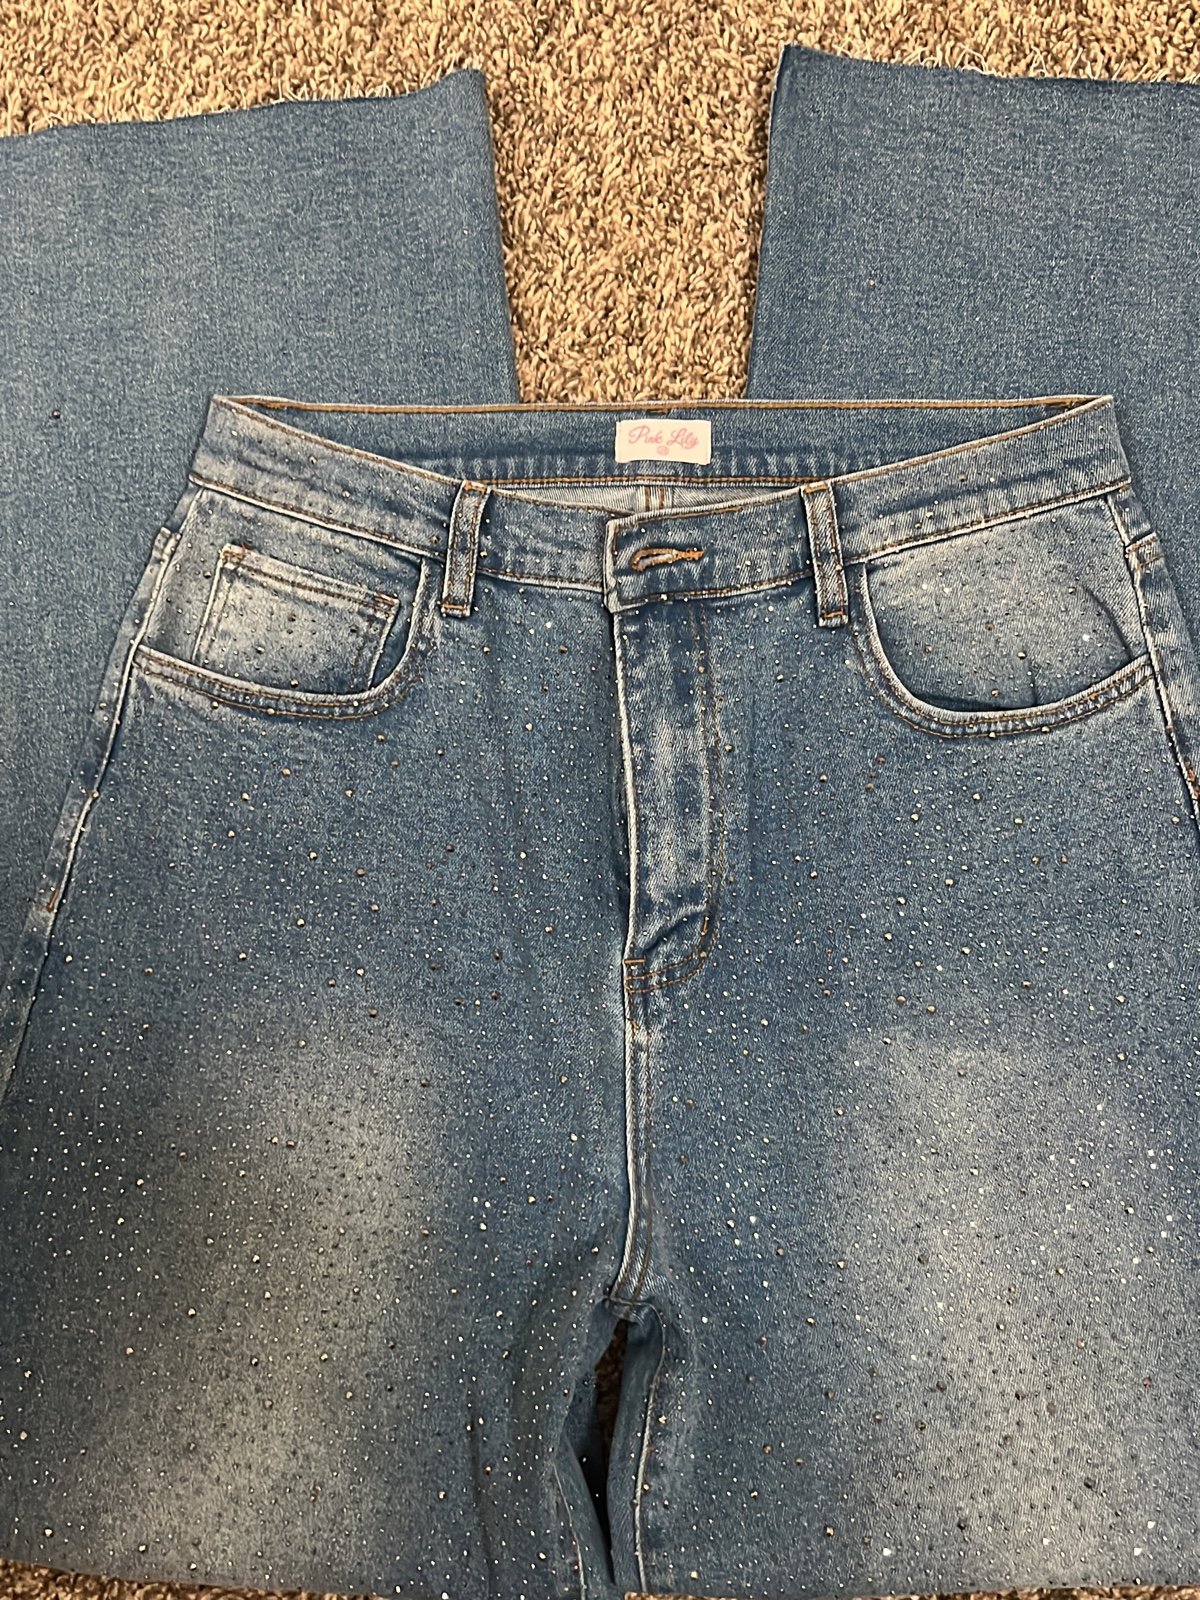 Beautiful Jeans ocN96f5t3 Buying Cheap